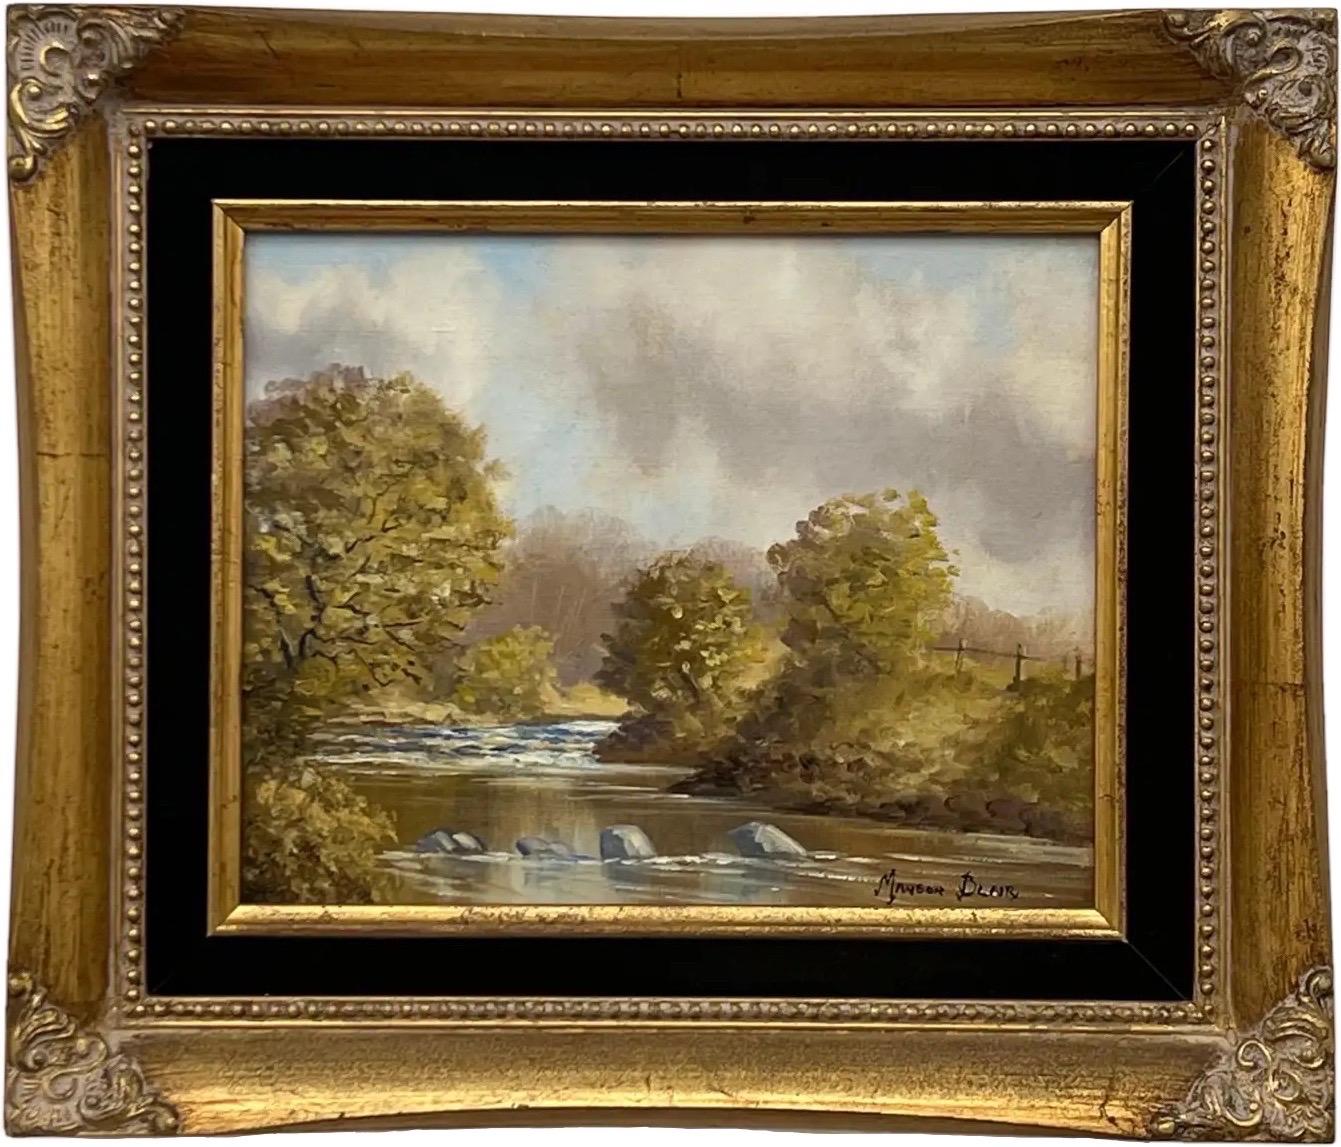 Manson Blair Figurative Painting - Original Oil Painting of River Landscape in Ireland by 20th Century Irish Artist